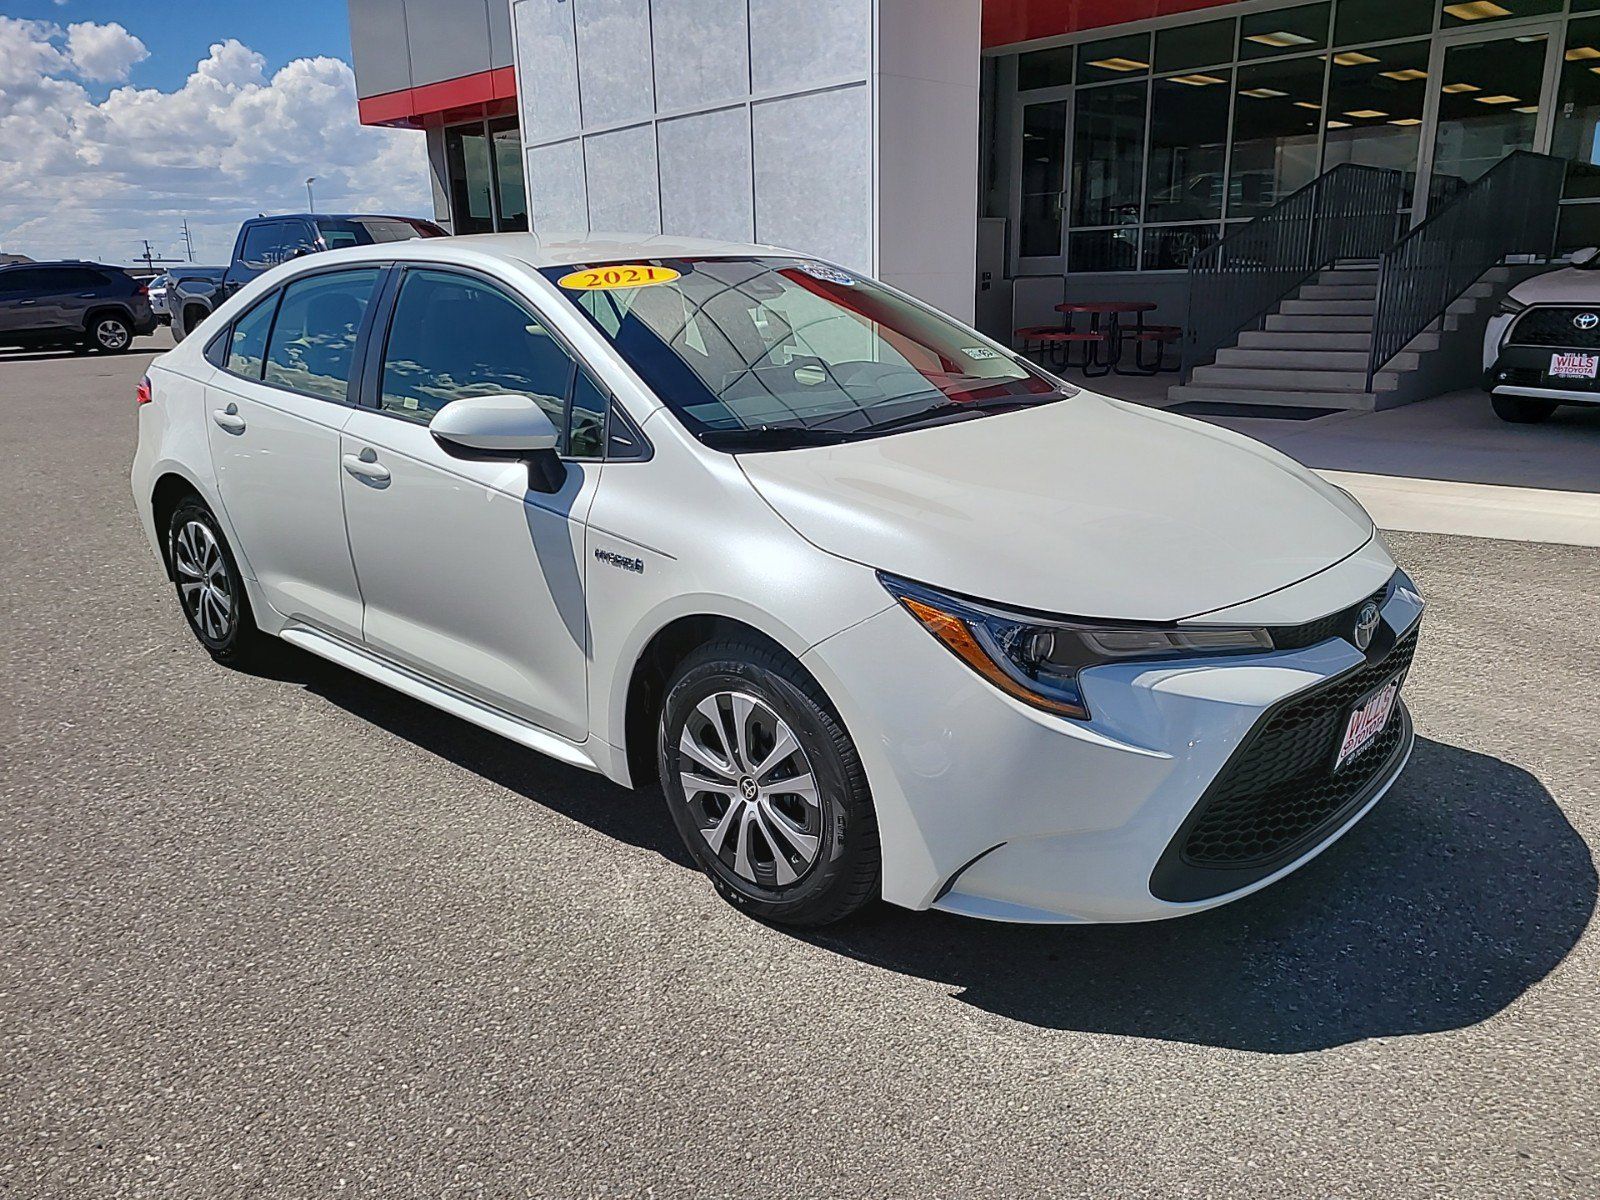 2021 - Toyota - Corolla - $23,221